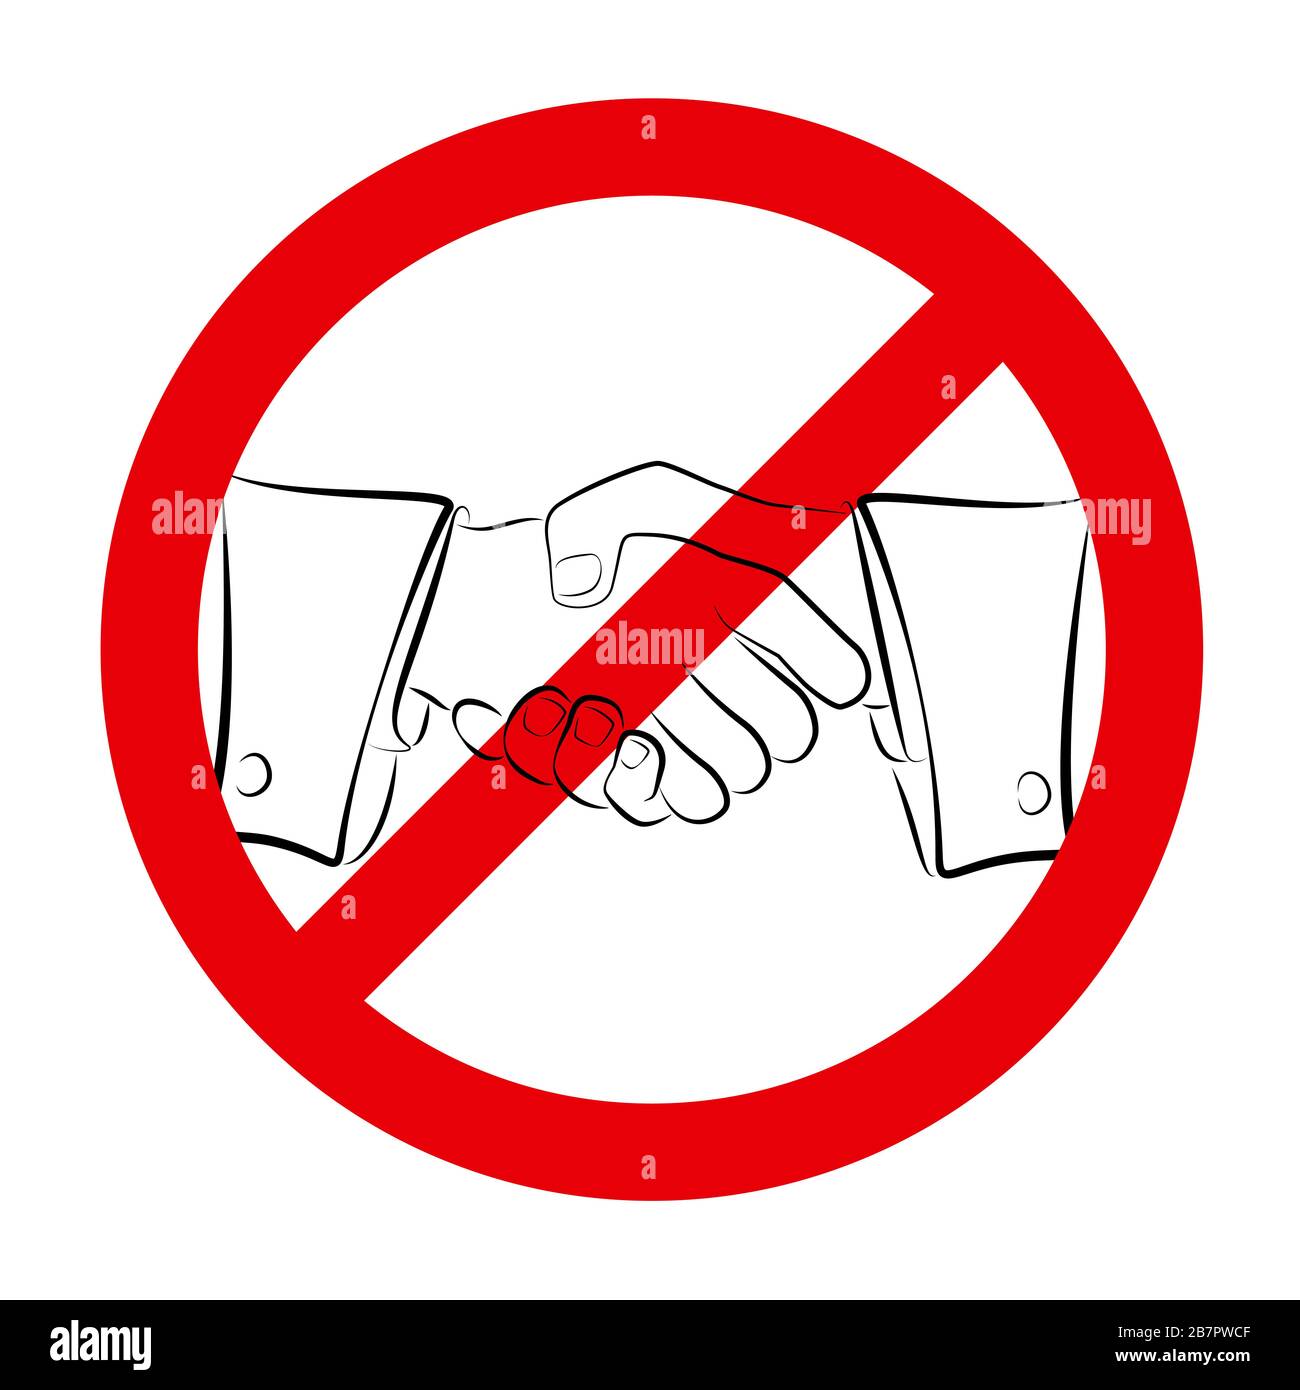 No handshake symbol button - illustration on white background. Stock Photo